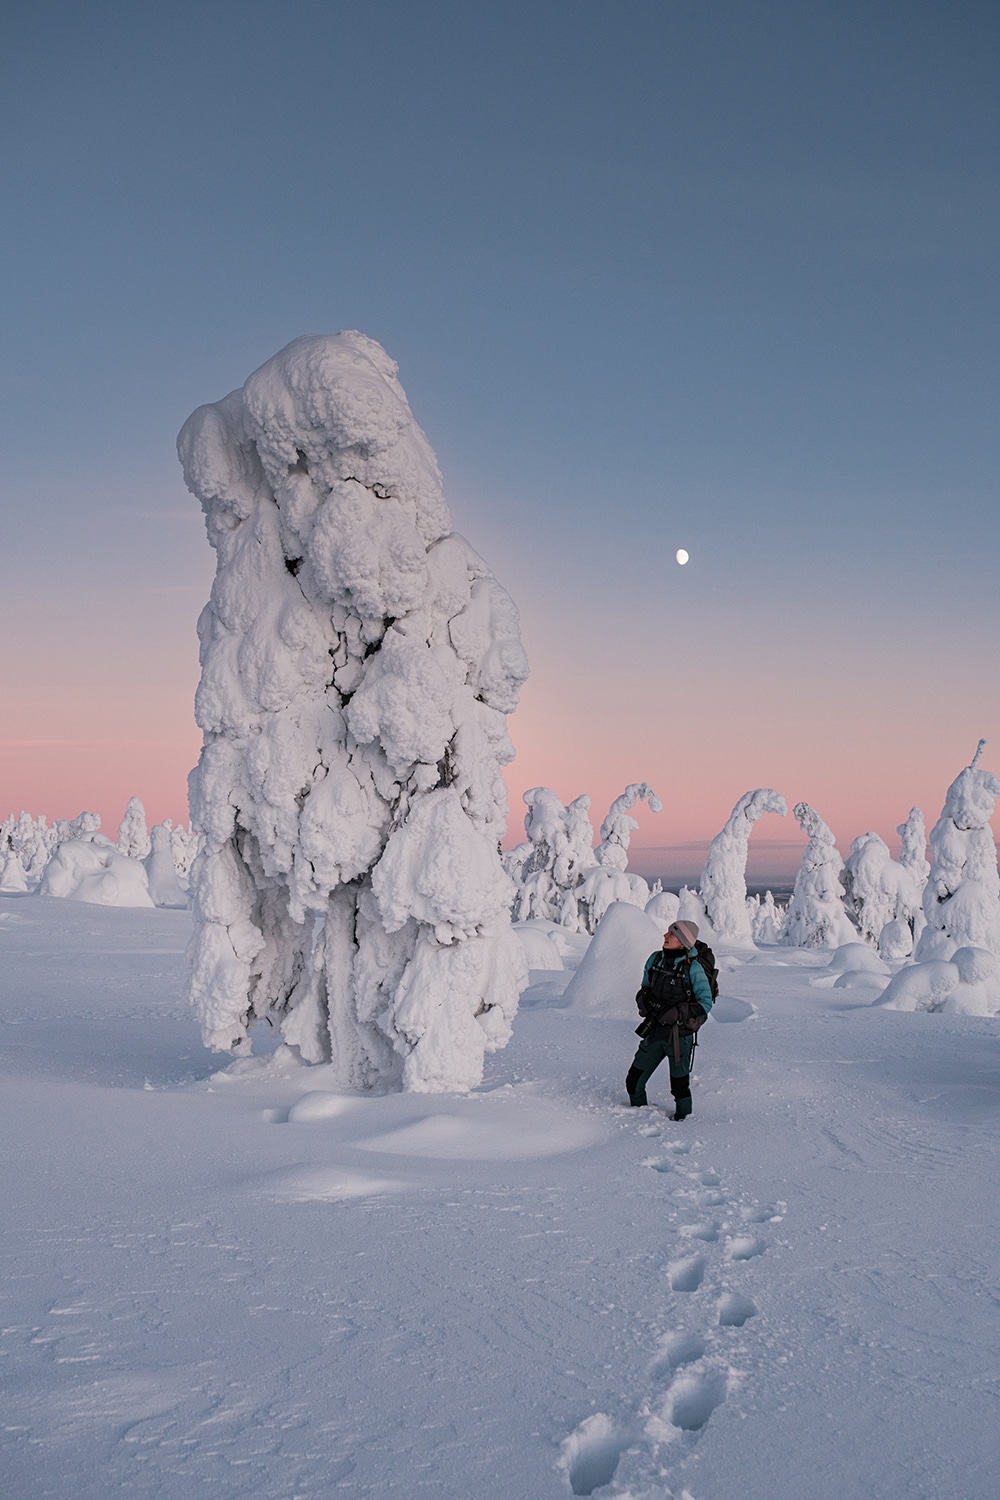 Foret enneigée en Laponie en Finlande